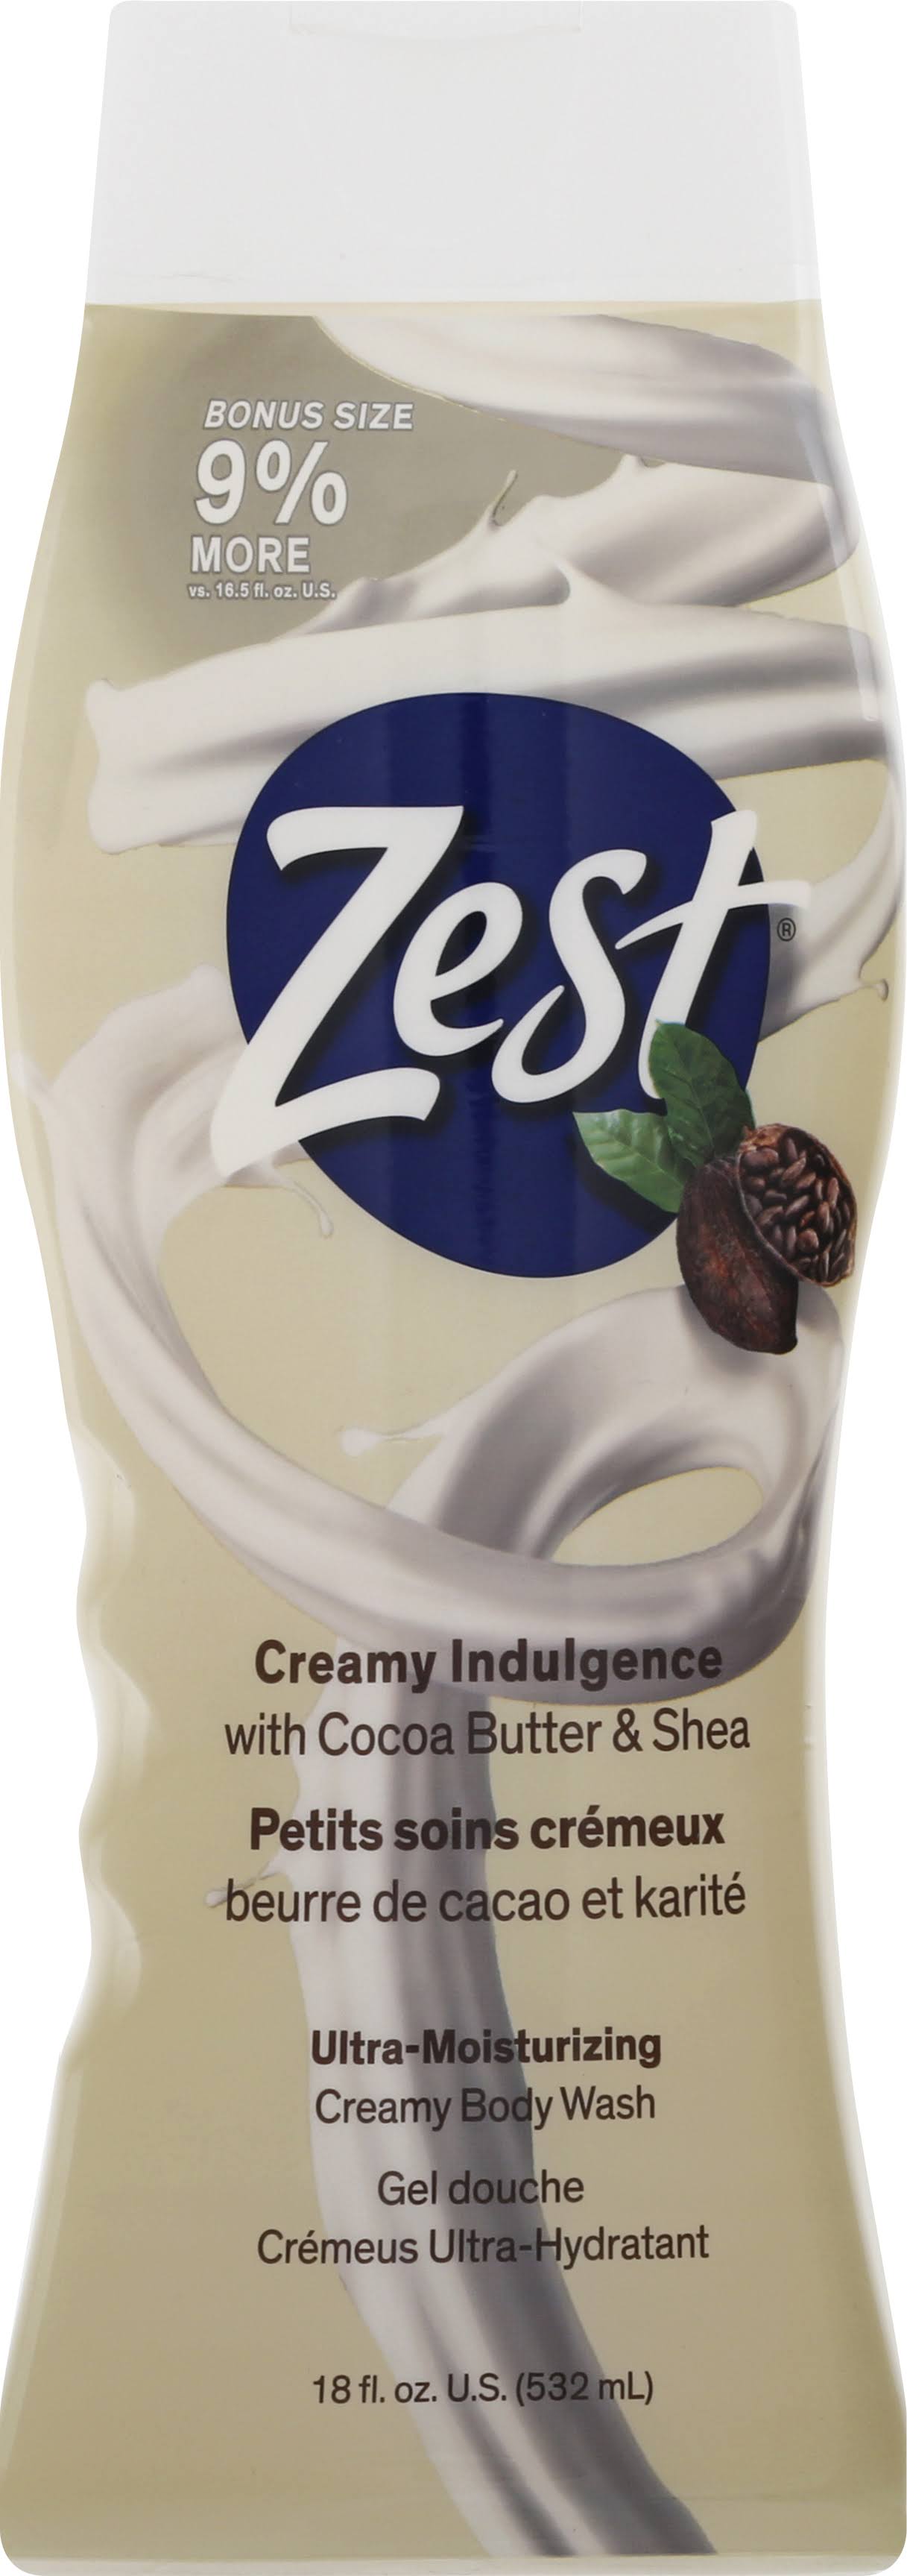 Zest Moisturizing Body Wash - Creamy Cocoa Butter and Shea, 18.0oz